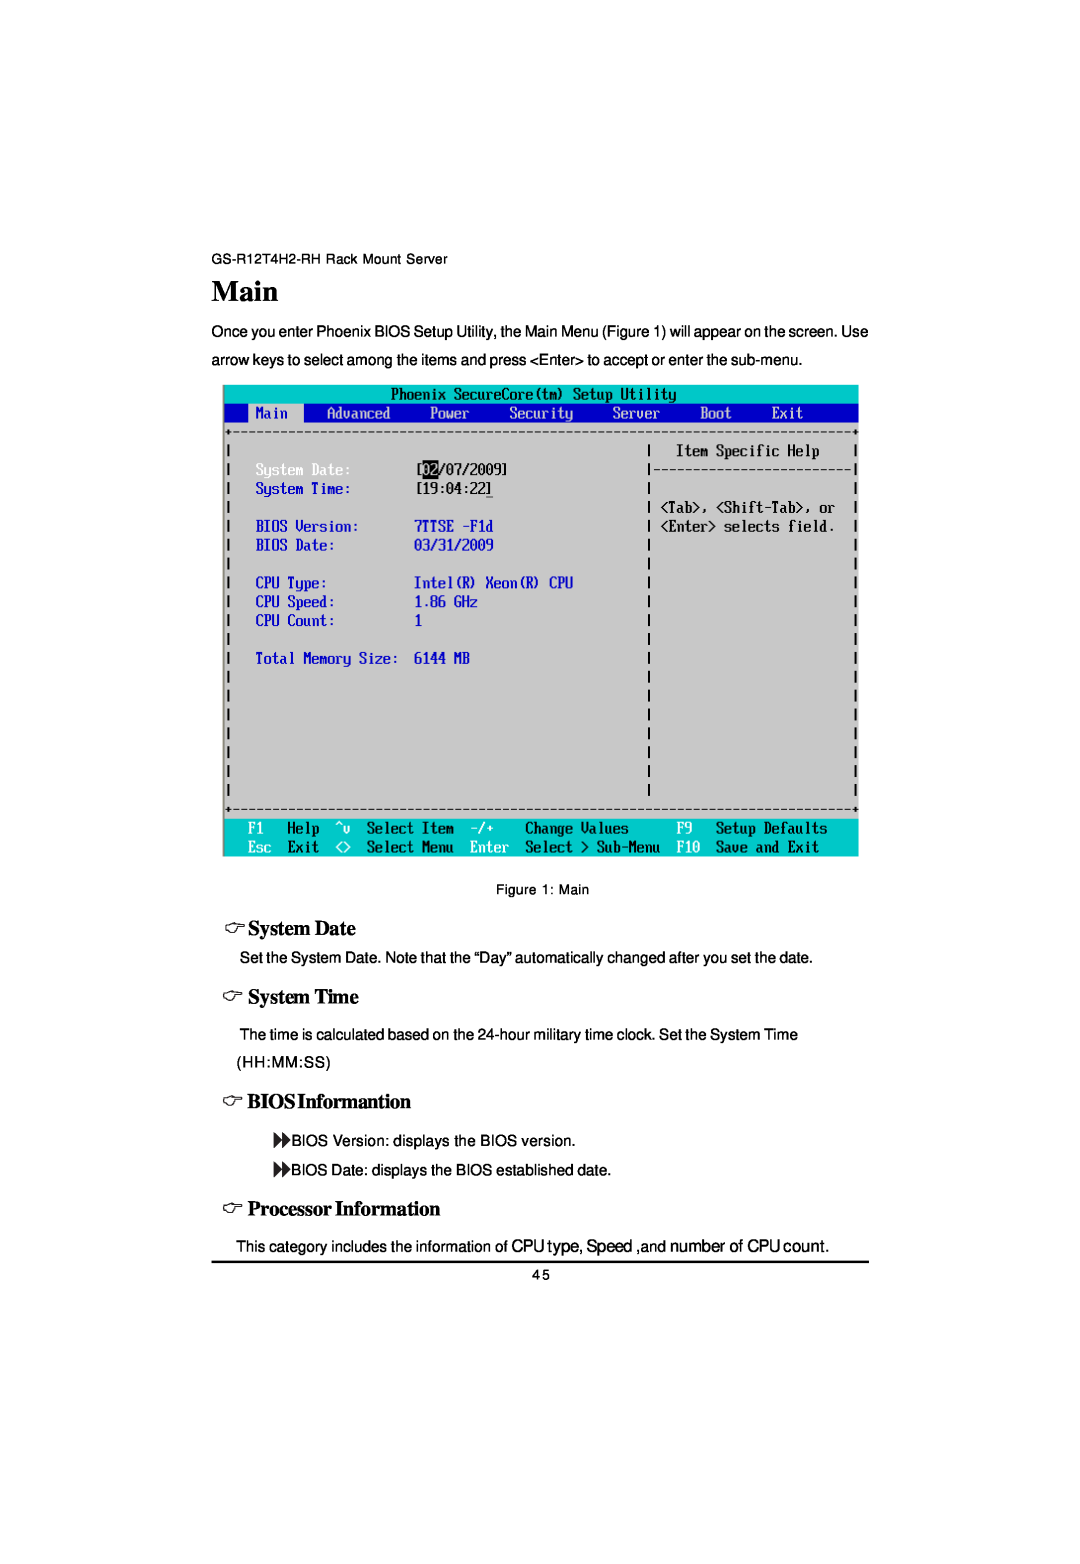 Gigabyte GS-R12T4H2-RH manual Main, System Date, System Time, BIOSInformantion, Processor Information 